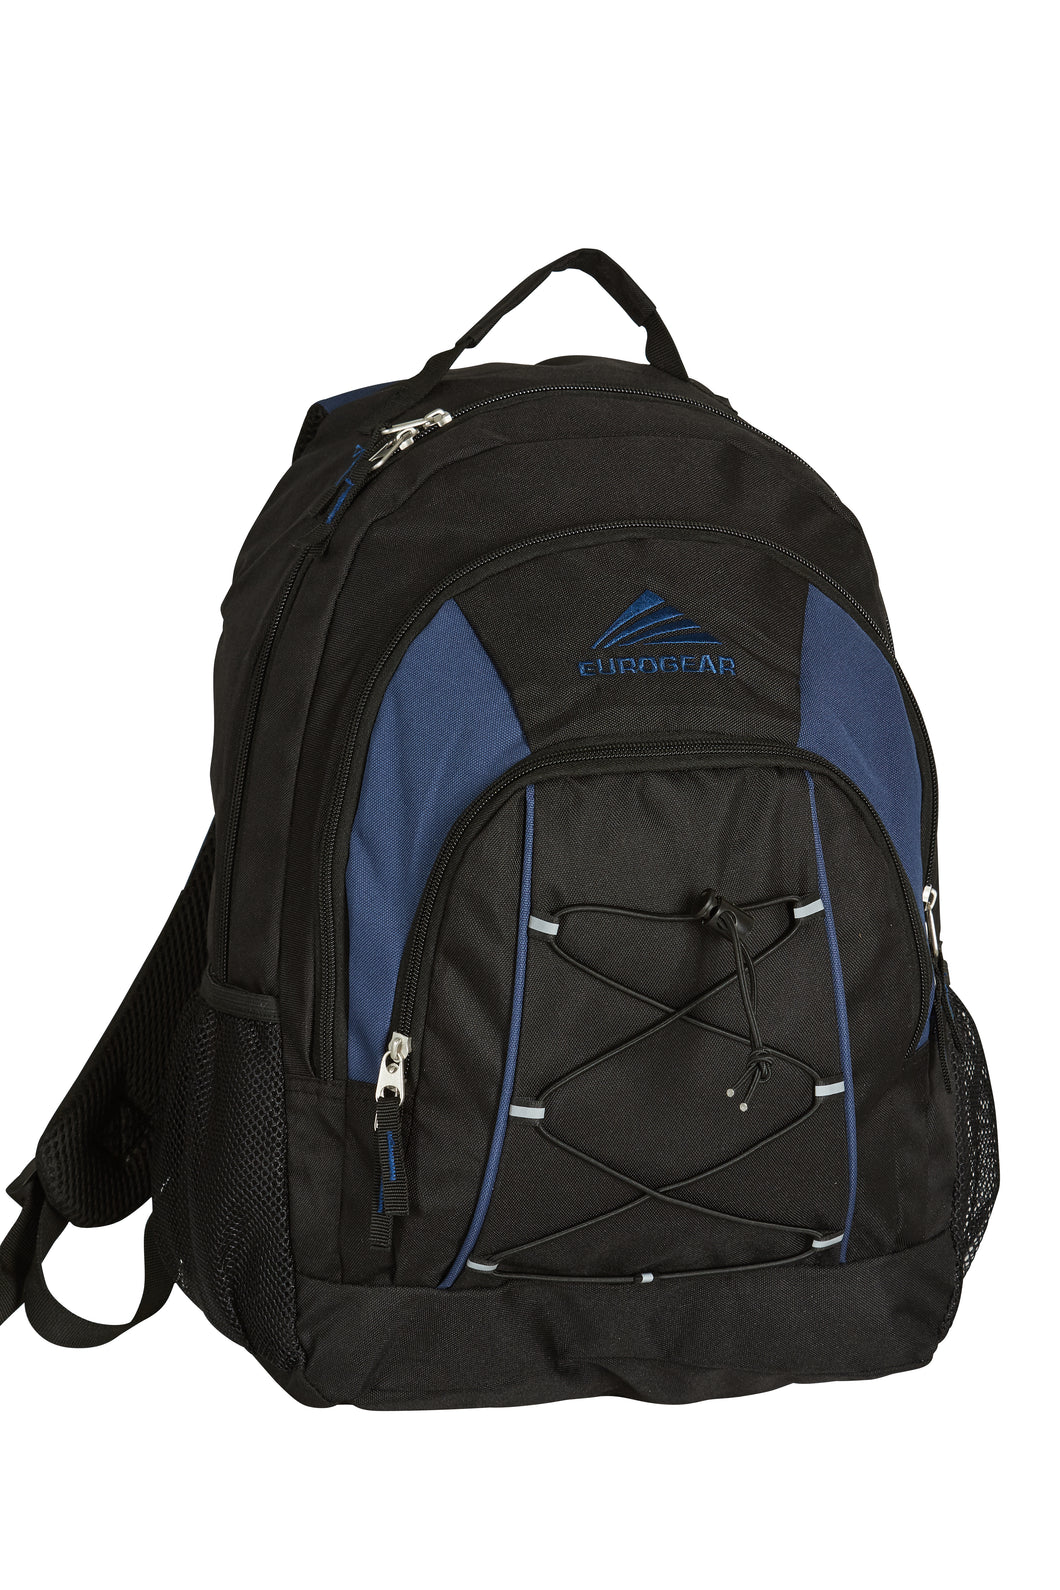 School PS301 Backpack ($13.50/Ea-24/Case)